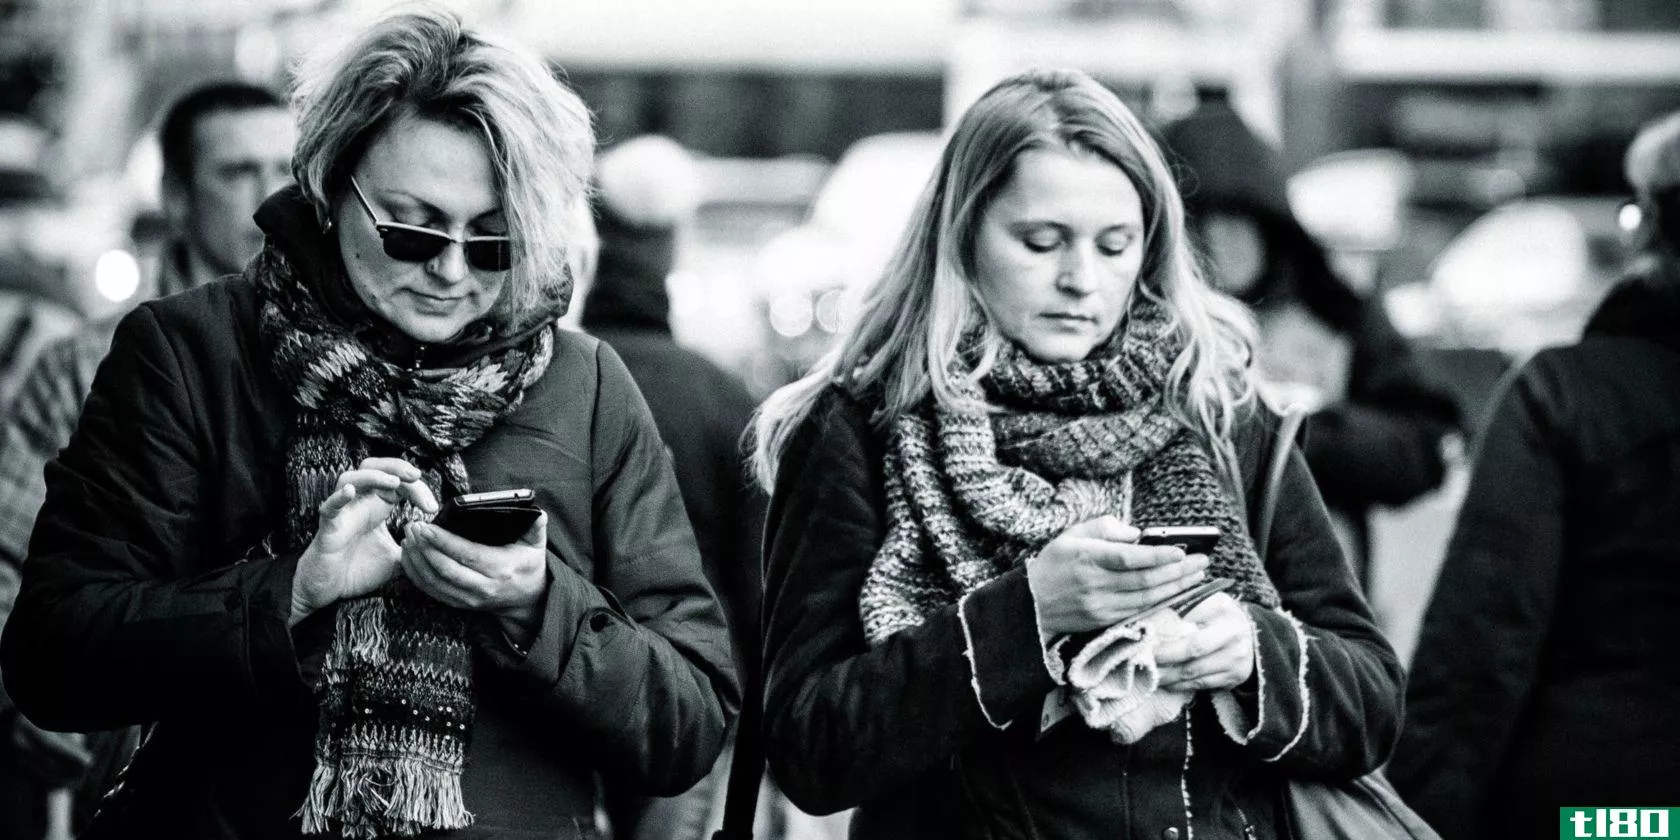 phone-addiction-women